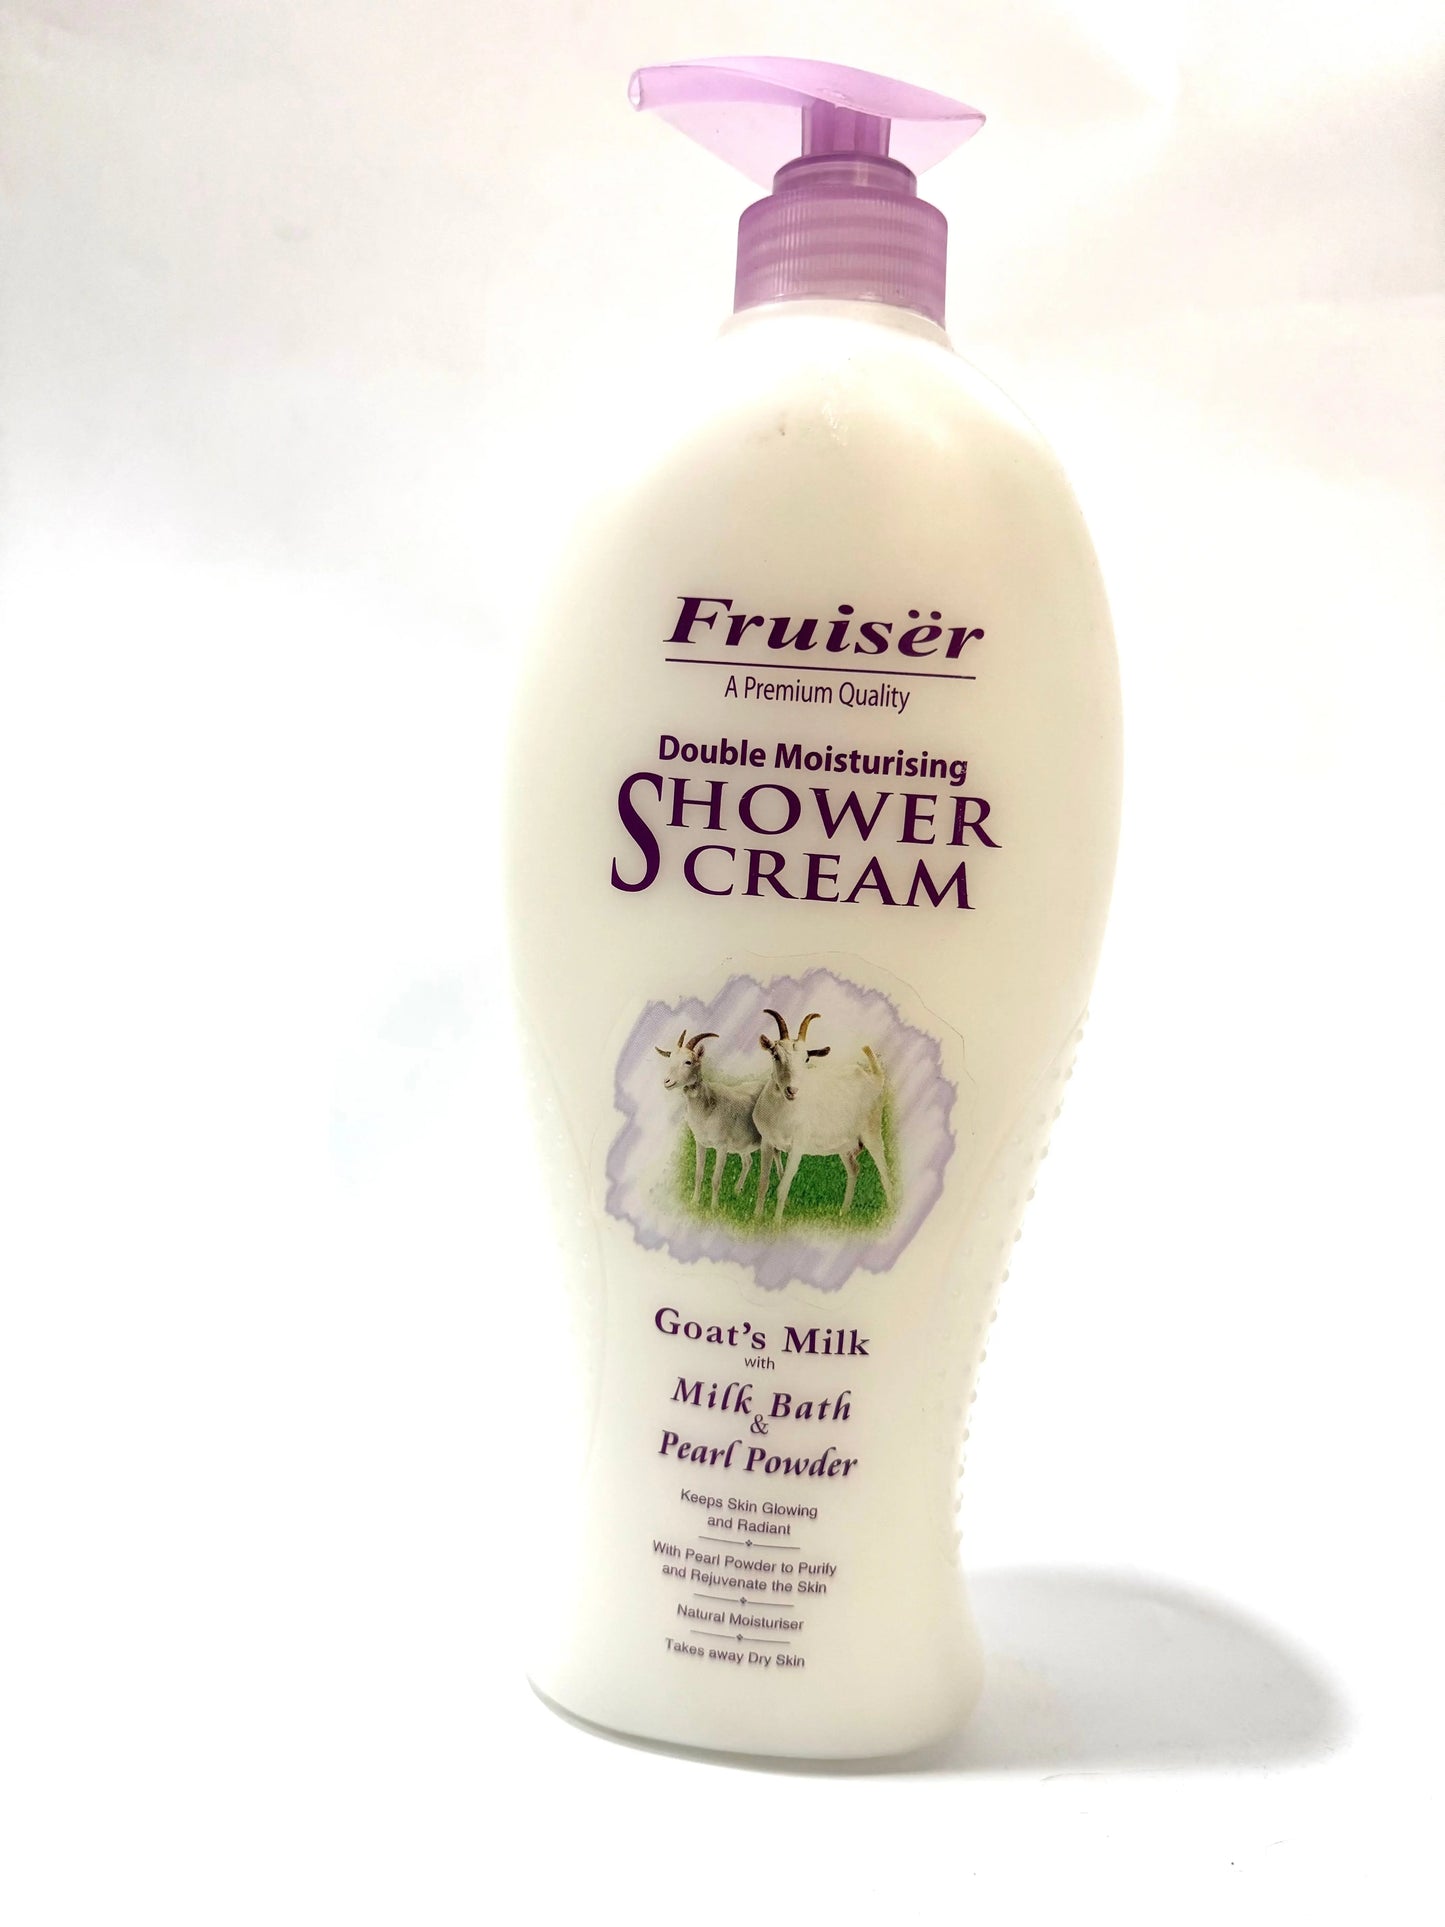 Fruiser Double Moisturising Shower Cream Goat’s Milk with Milk Bath & Pearl Powder La Mimz Beauty & Fashion Store